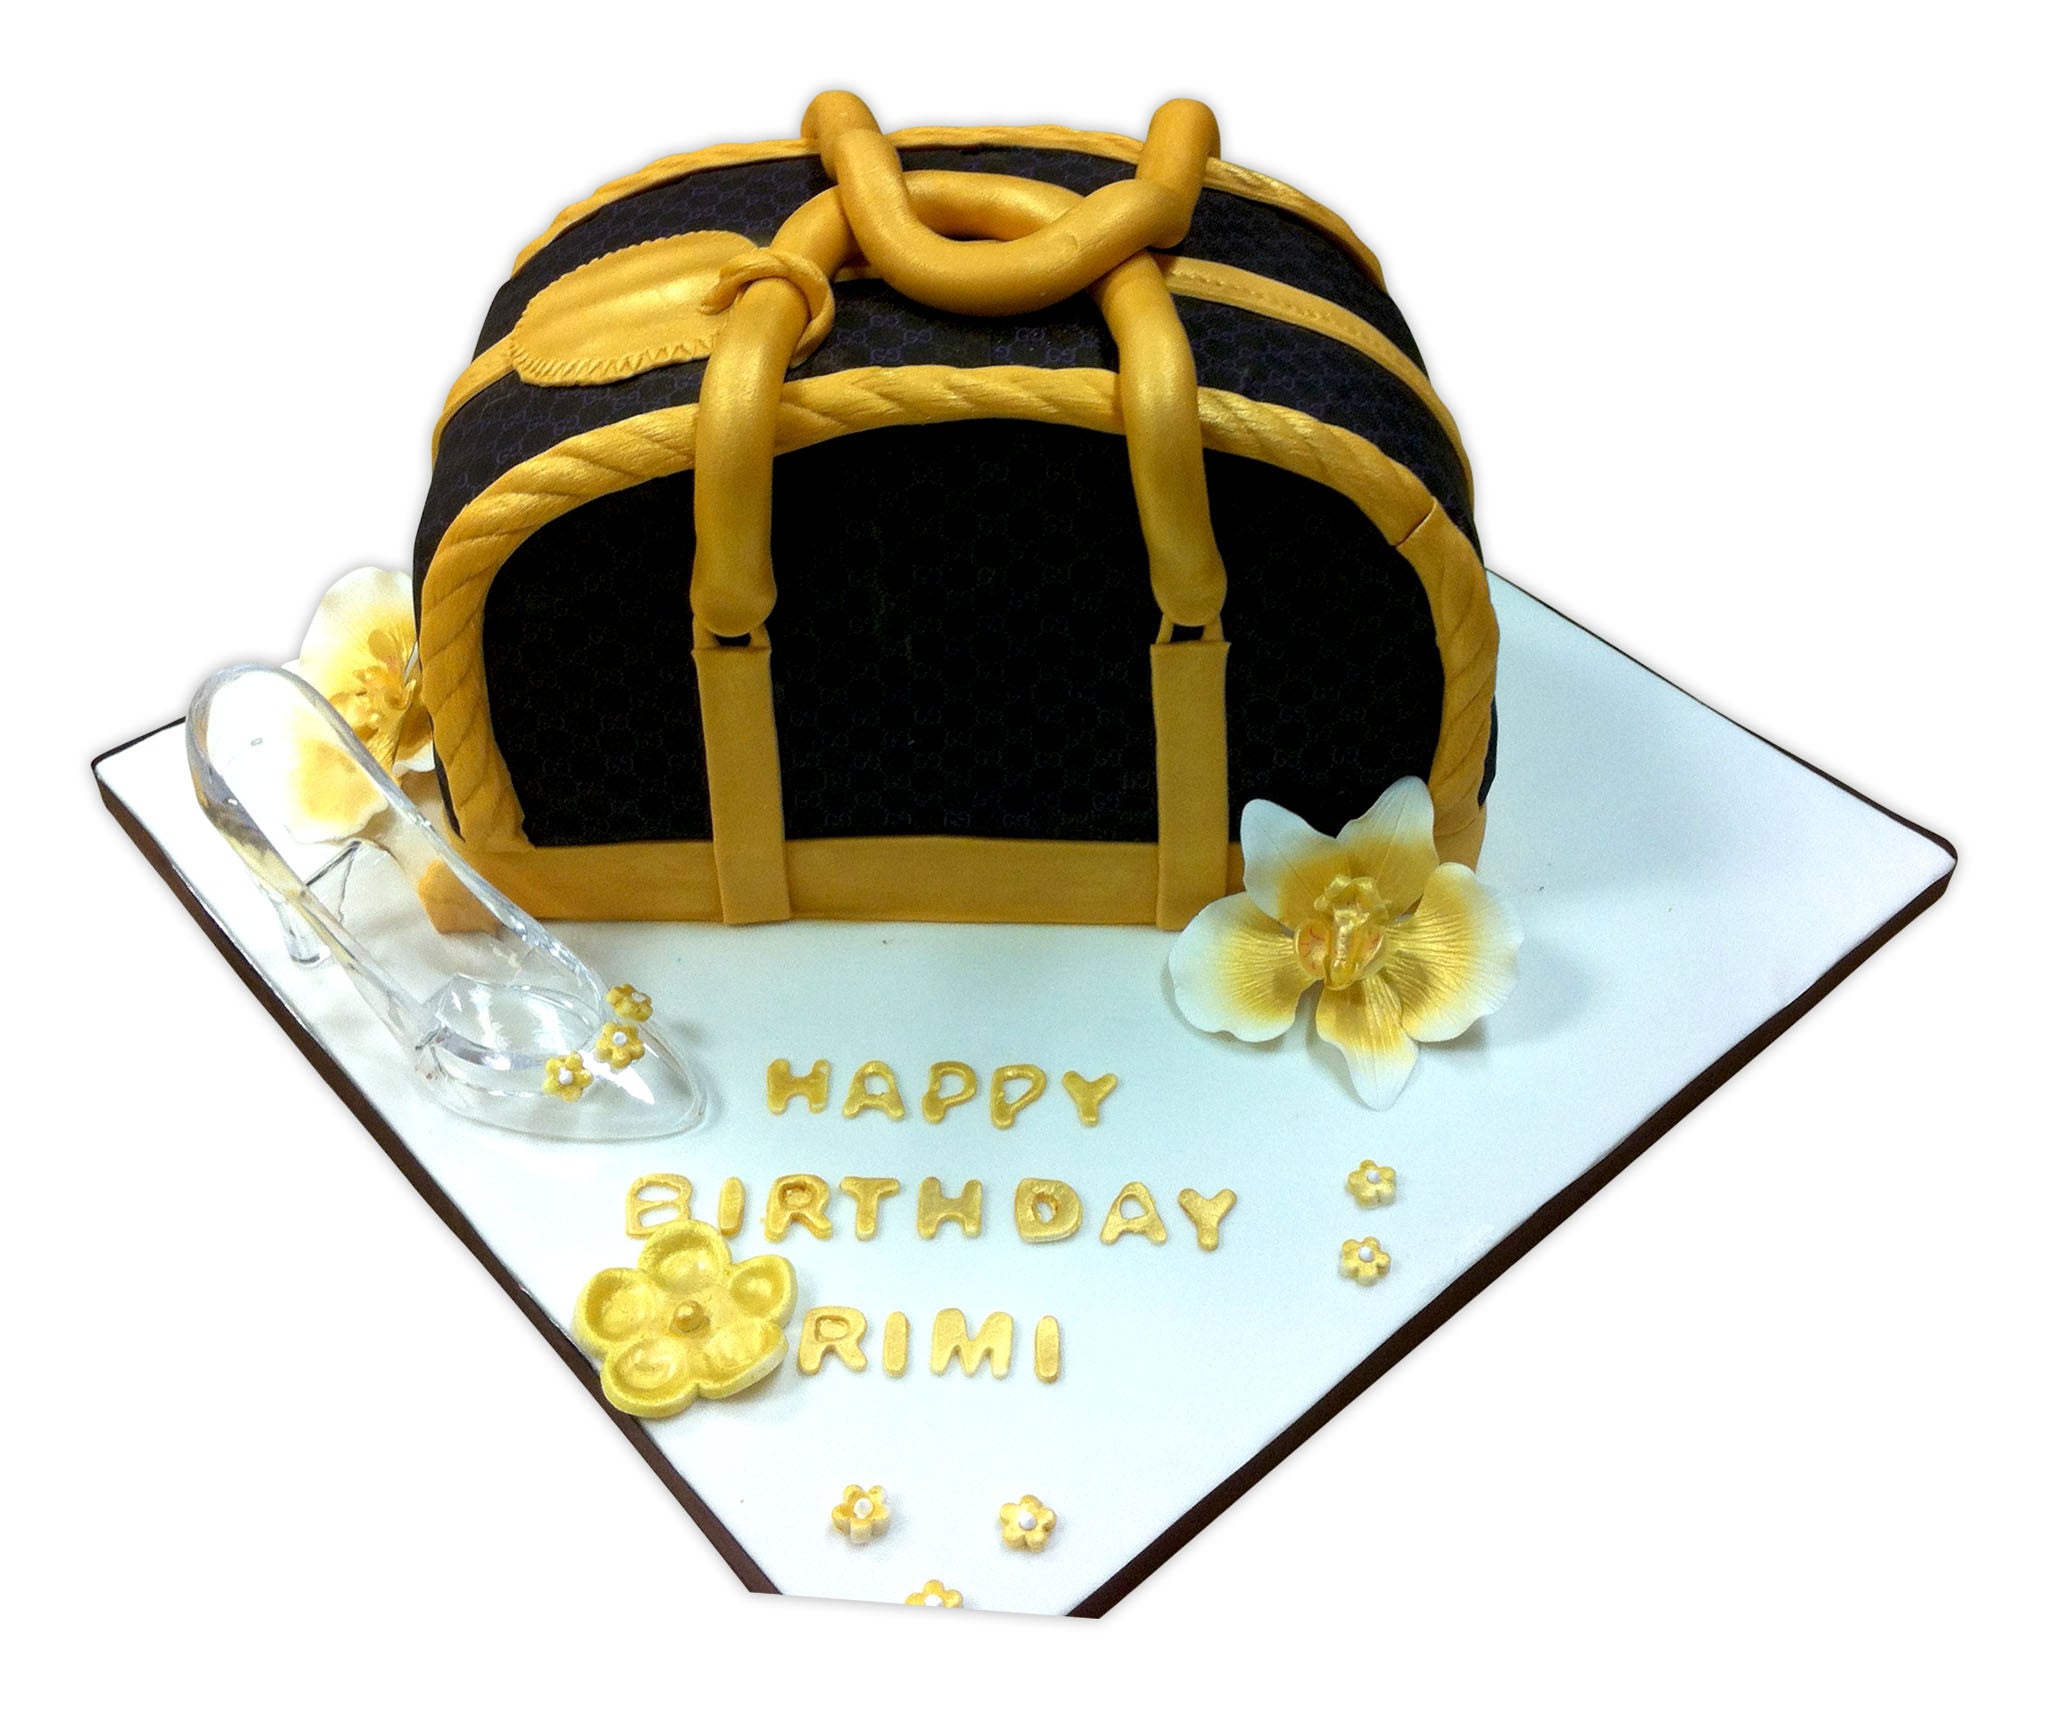 Gucci Handbag Cake - Marilia's Cakes and Deco